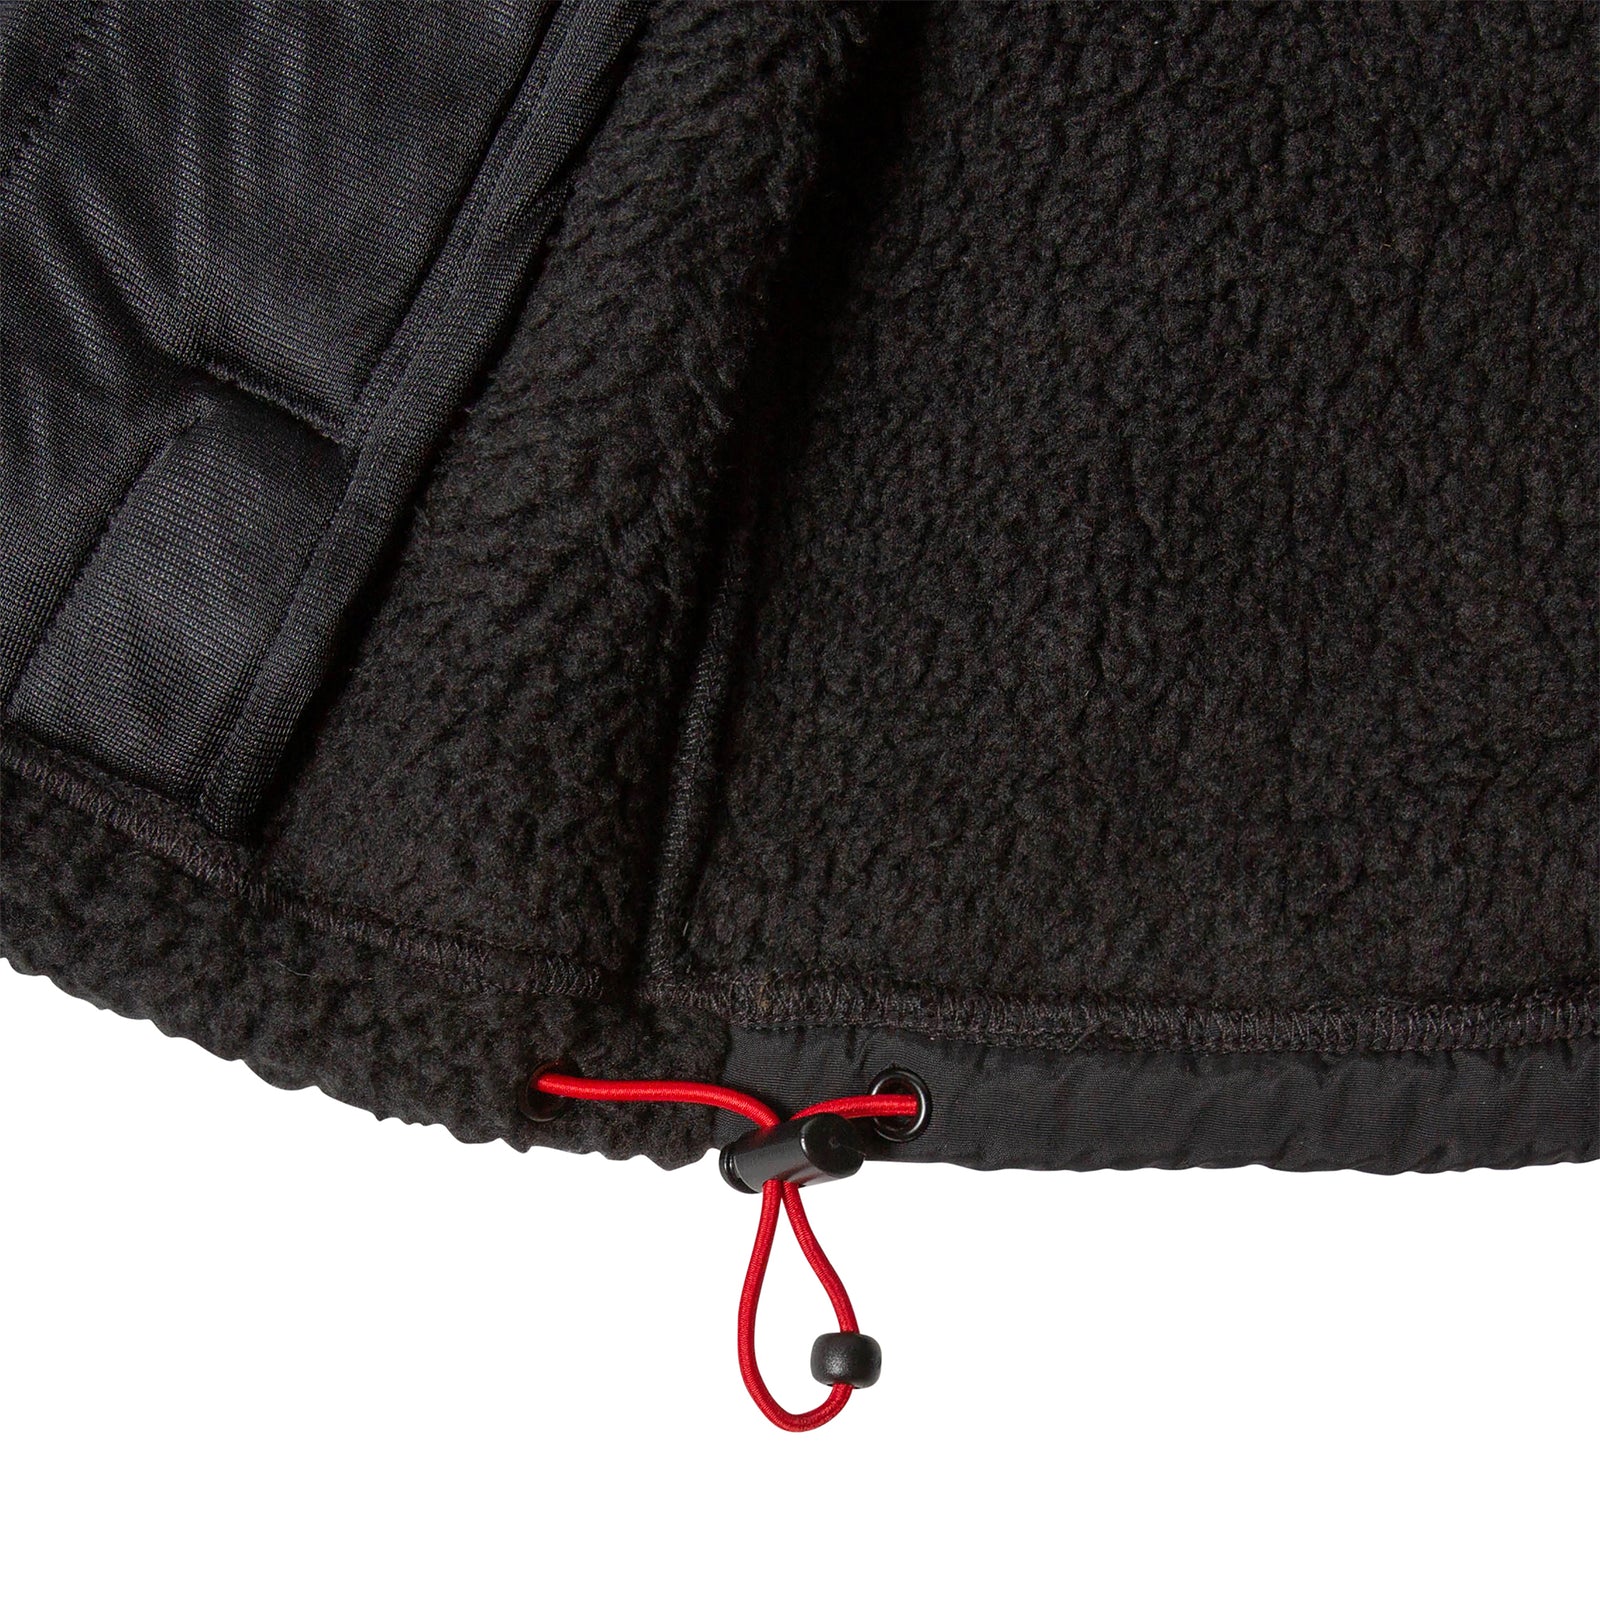 General detail product shot of the women's subalpine fleece in black showing shock cord hem adjustment.